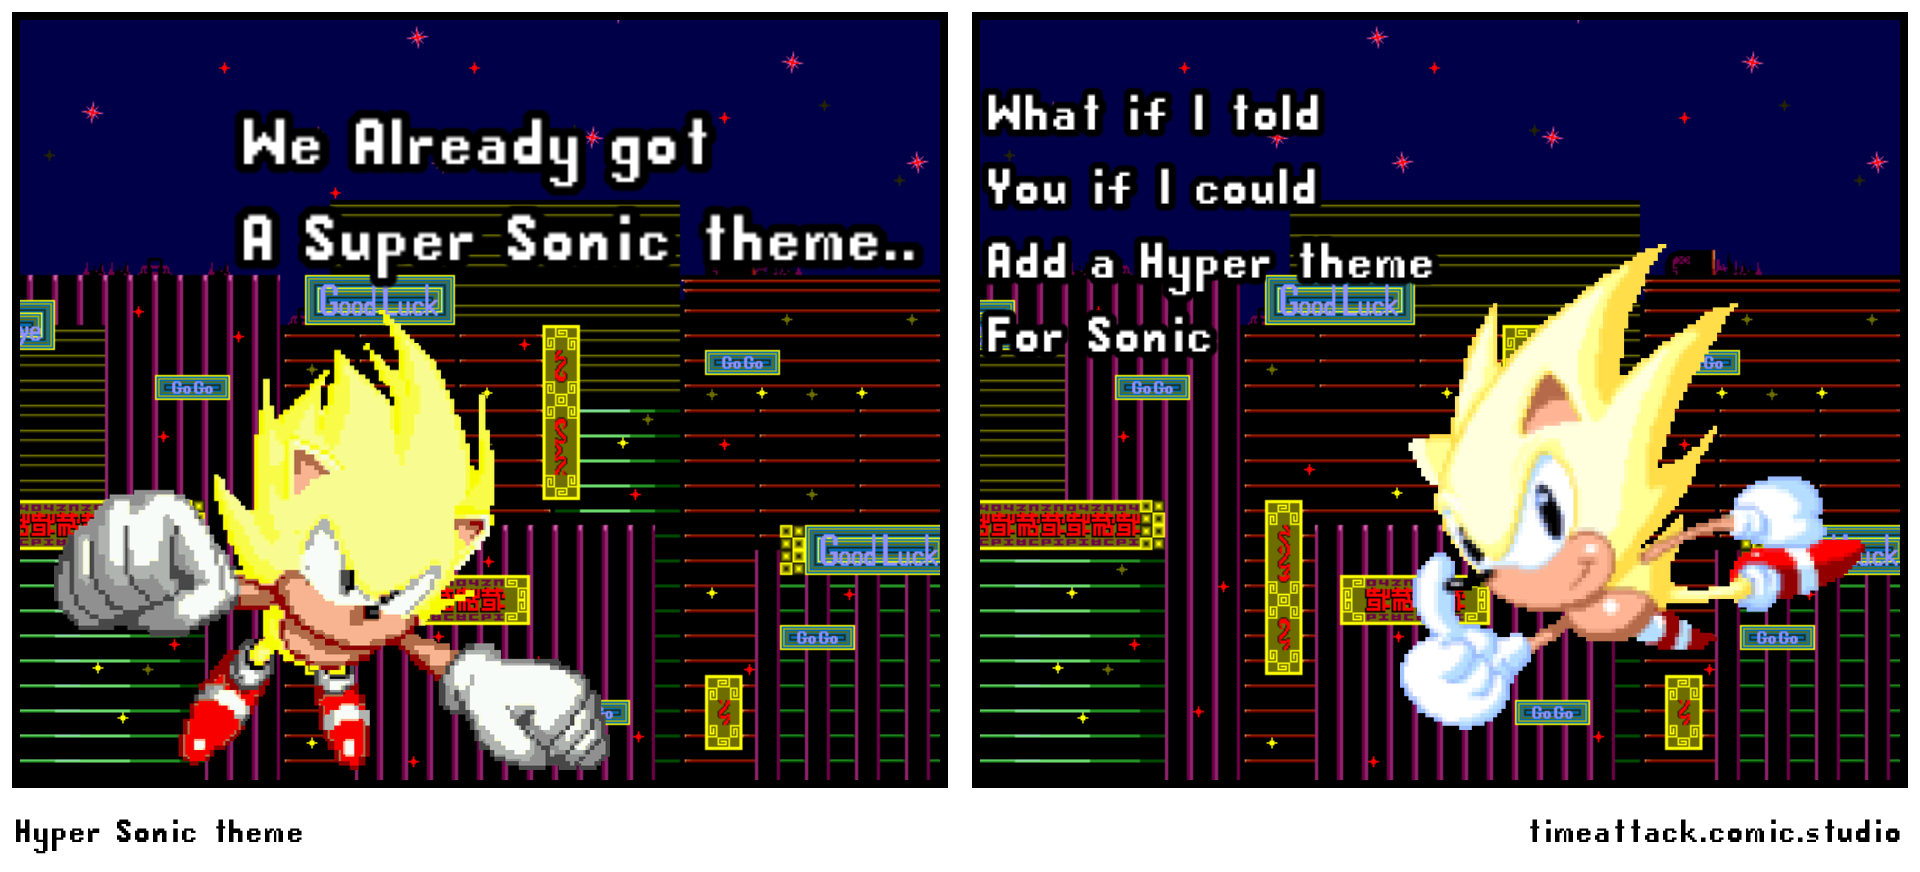 Hyper Sonic theme